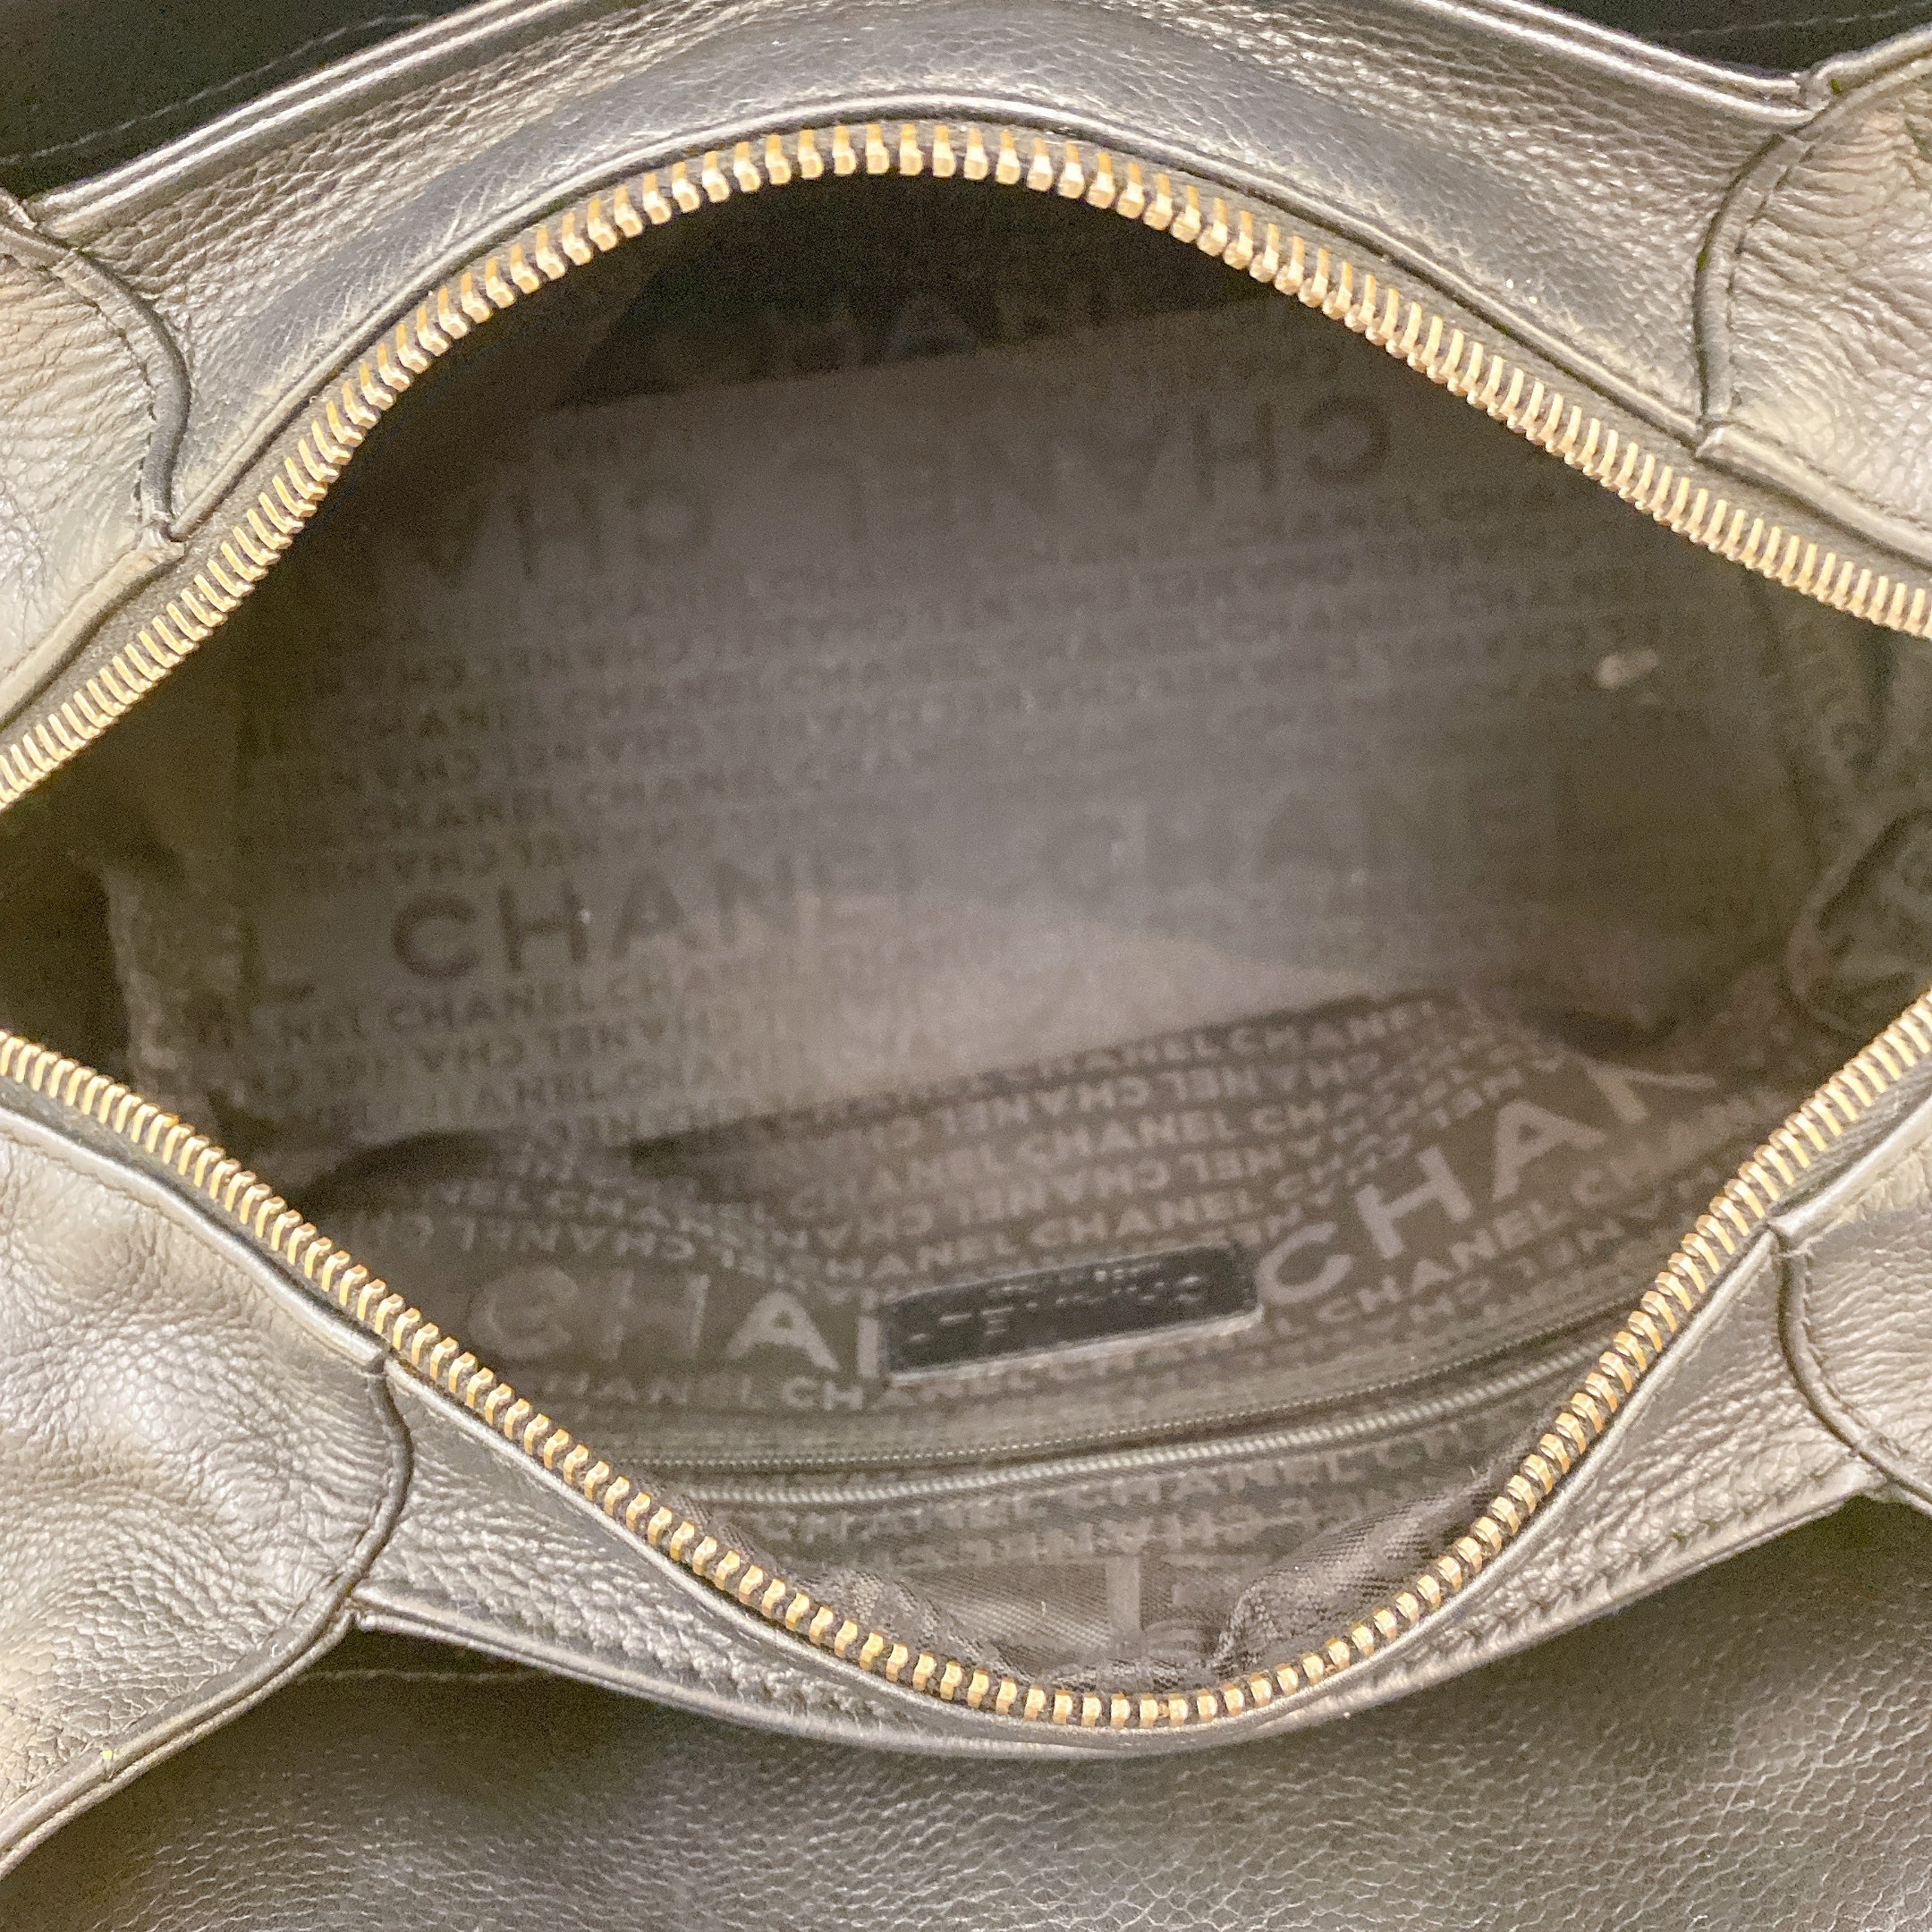 Chanel Caviar Handbag